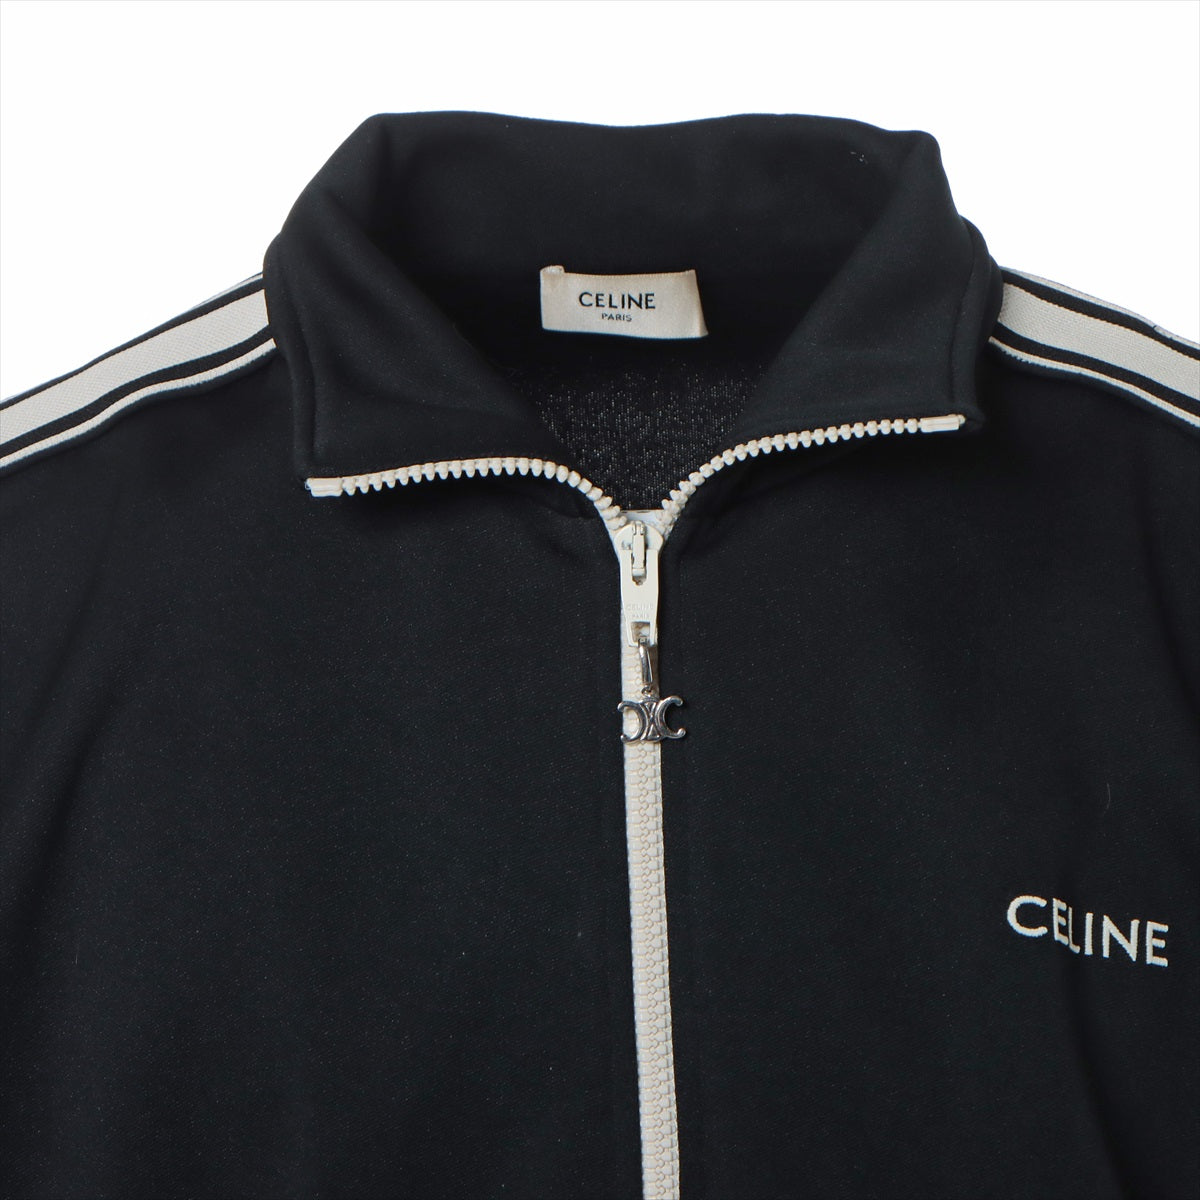 CELINE Polyester Sweatsuit S Men's Black  2Y490121O Eddie period